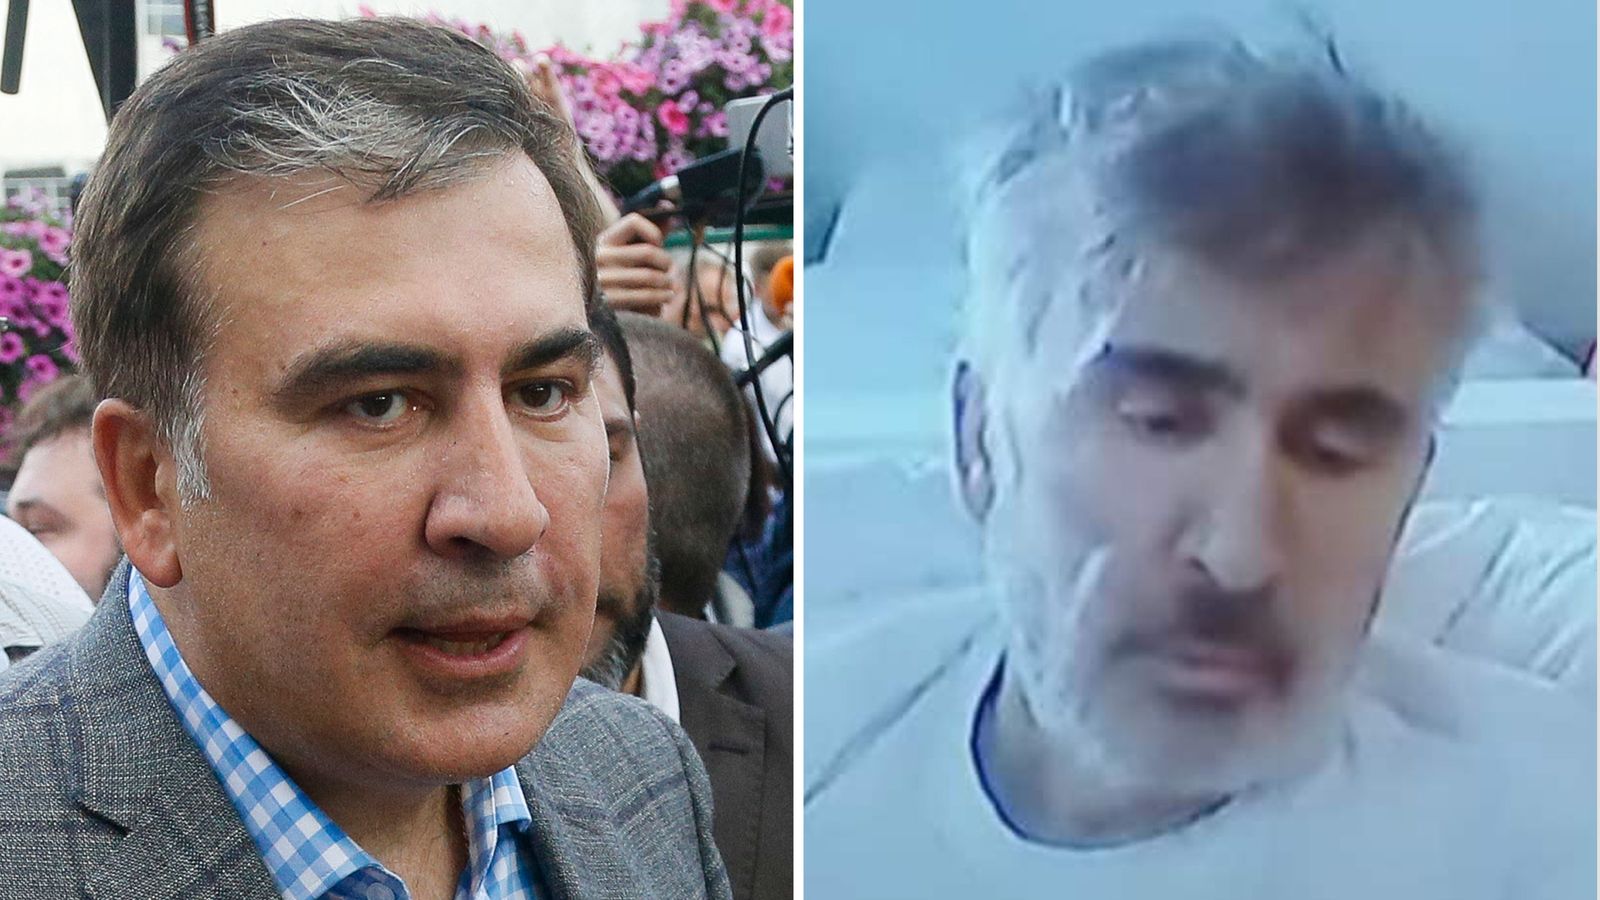 Pro-Western former Georgian president Mikheil Saakashvili 'close to death' after alleged prison poisoning